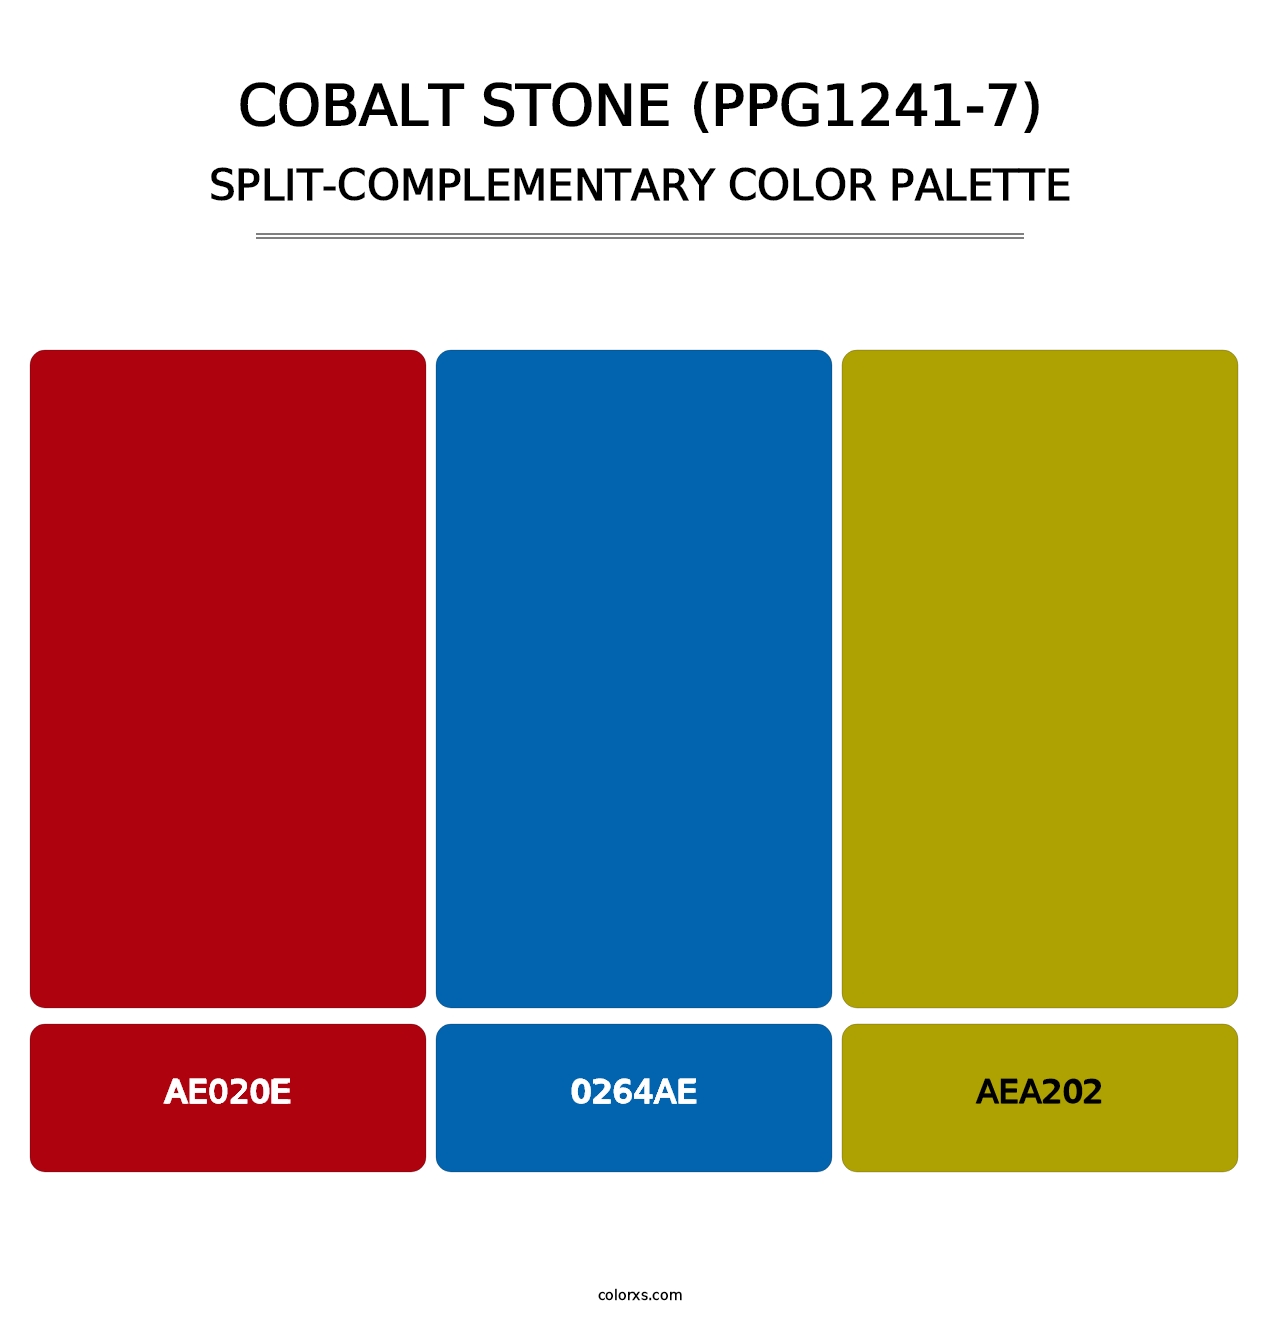 Cobalt Stone (PPG1241-7) - Split-Complementary Color Palette